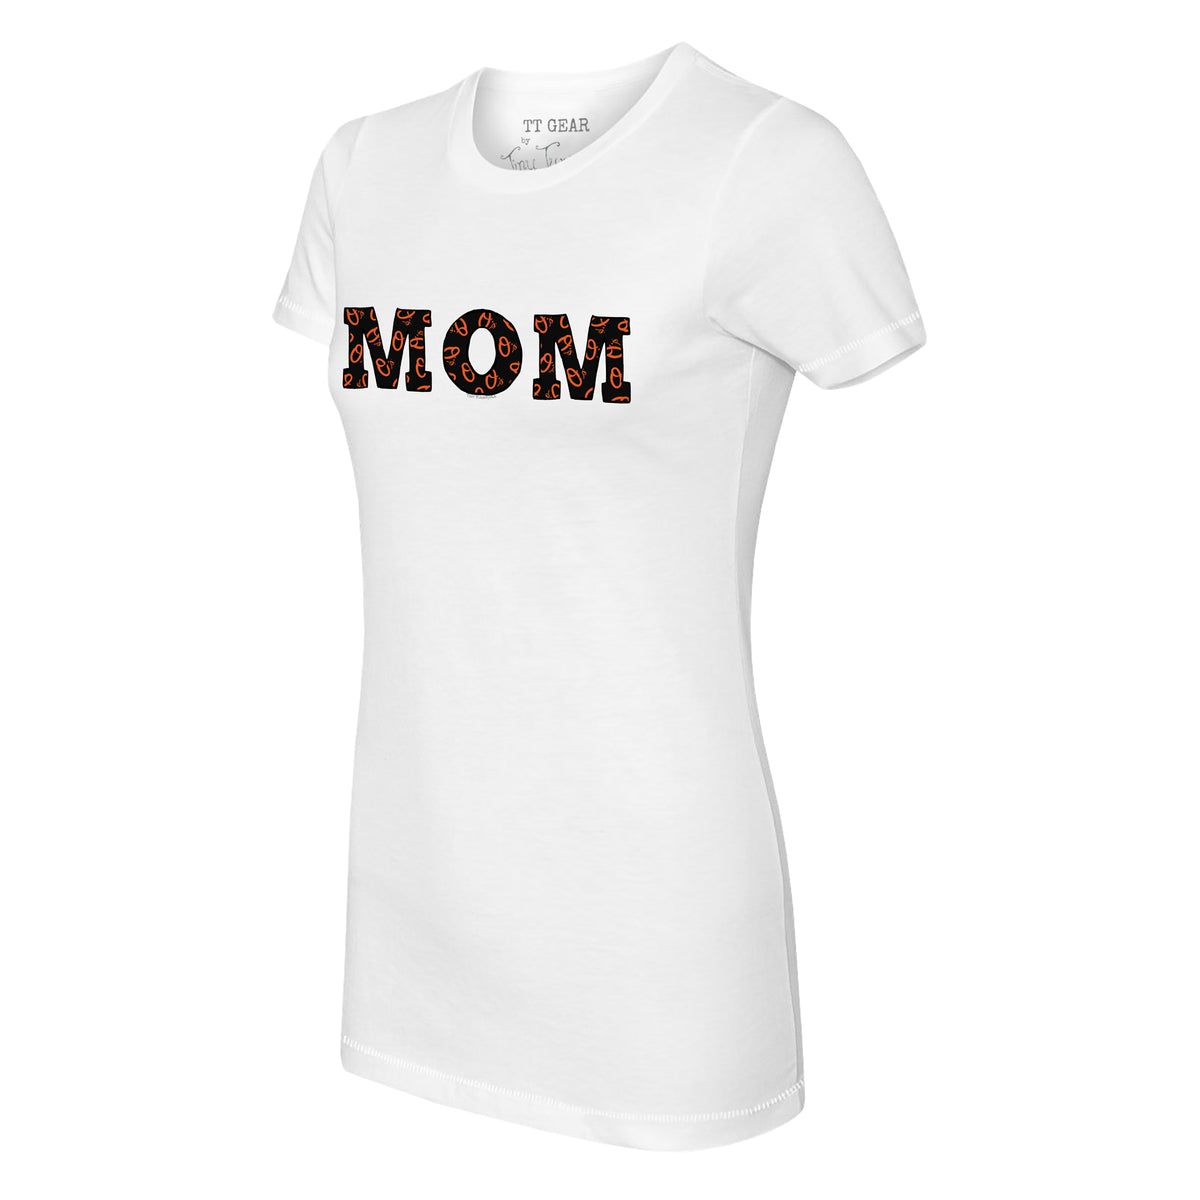 Baltimore Orioles Mom Tee Shirt